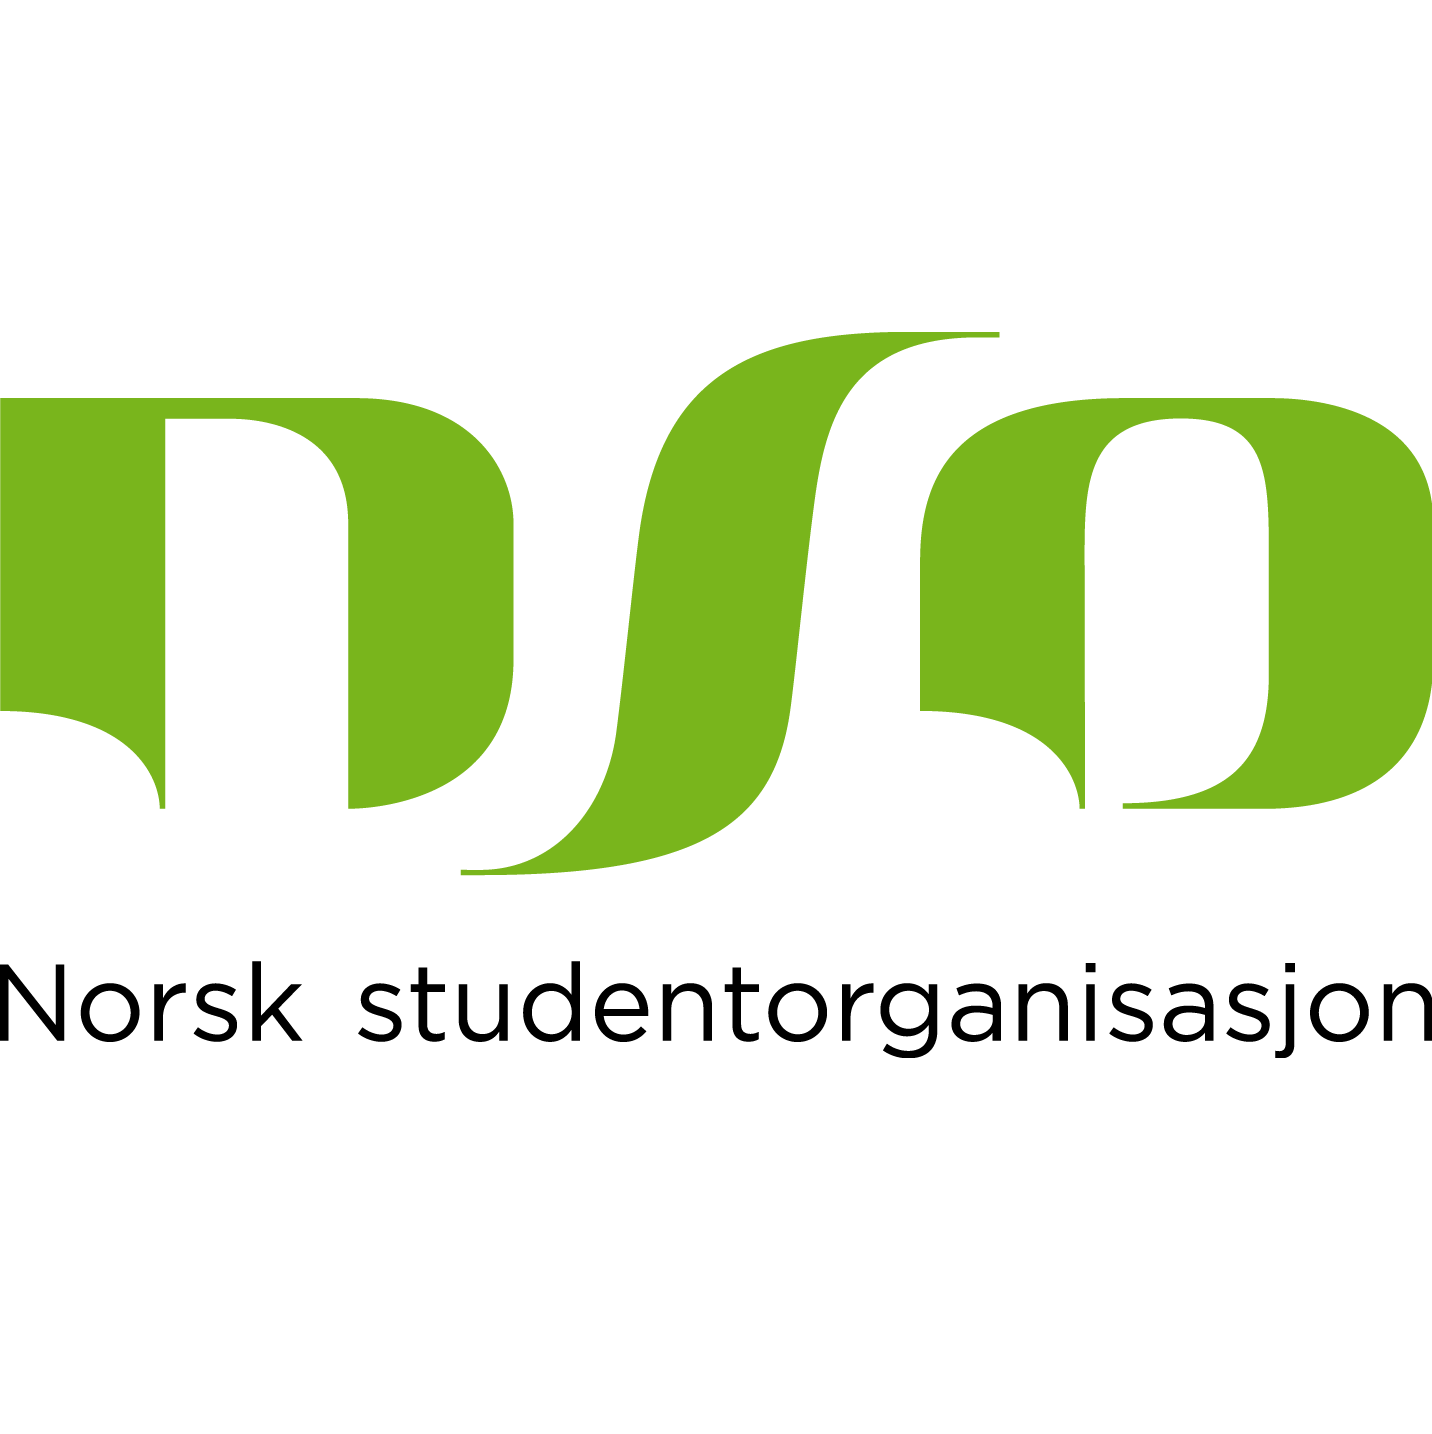 Norsk studentorganisasjon SOS International survey partner